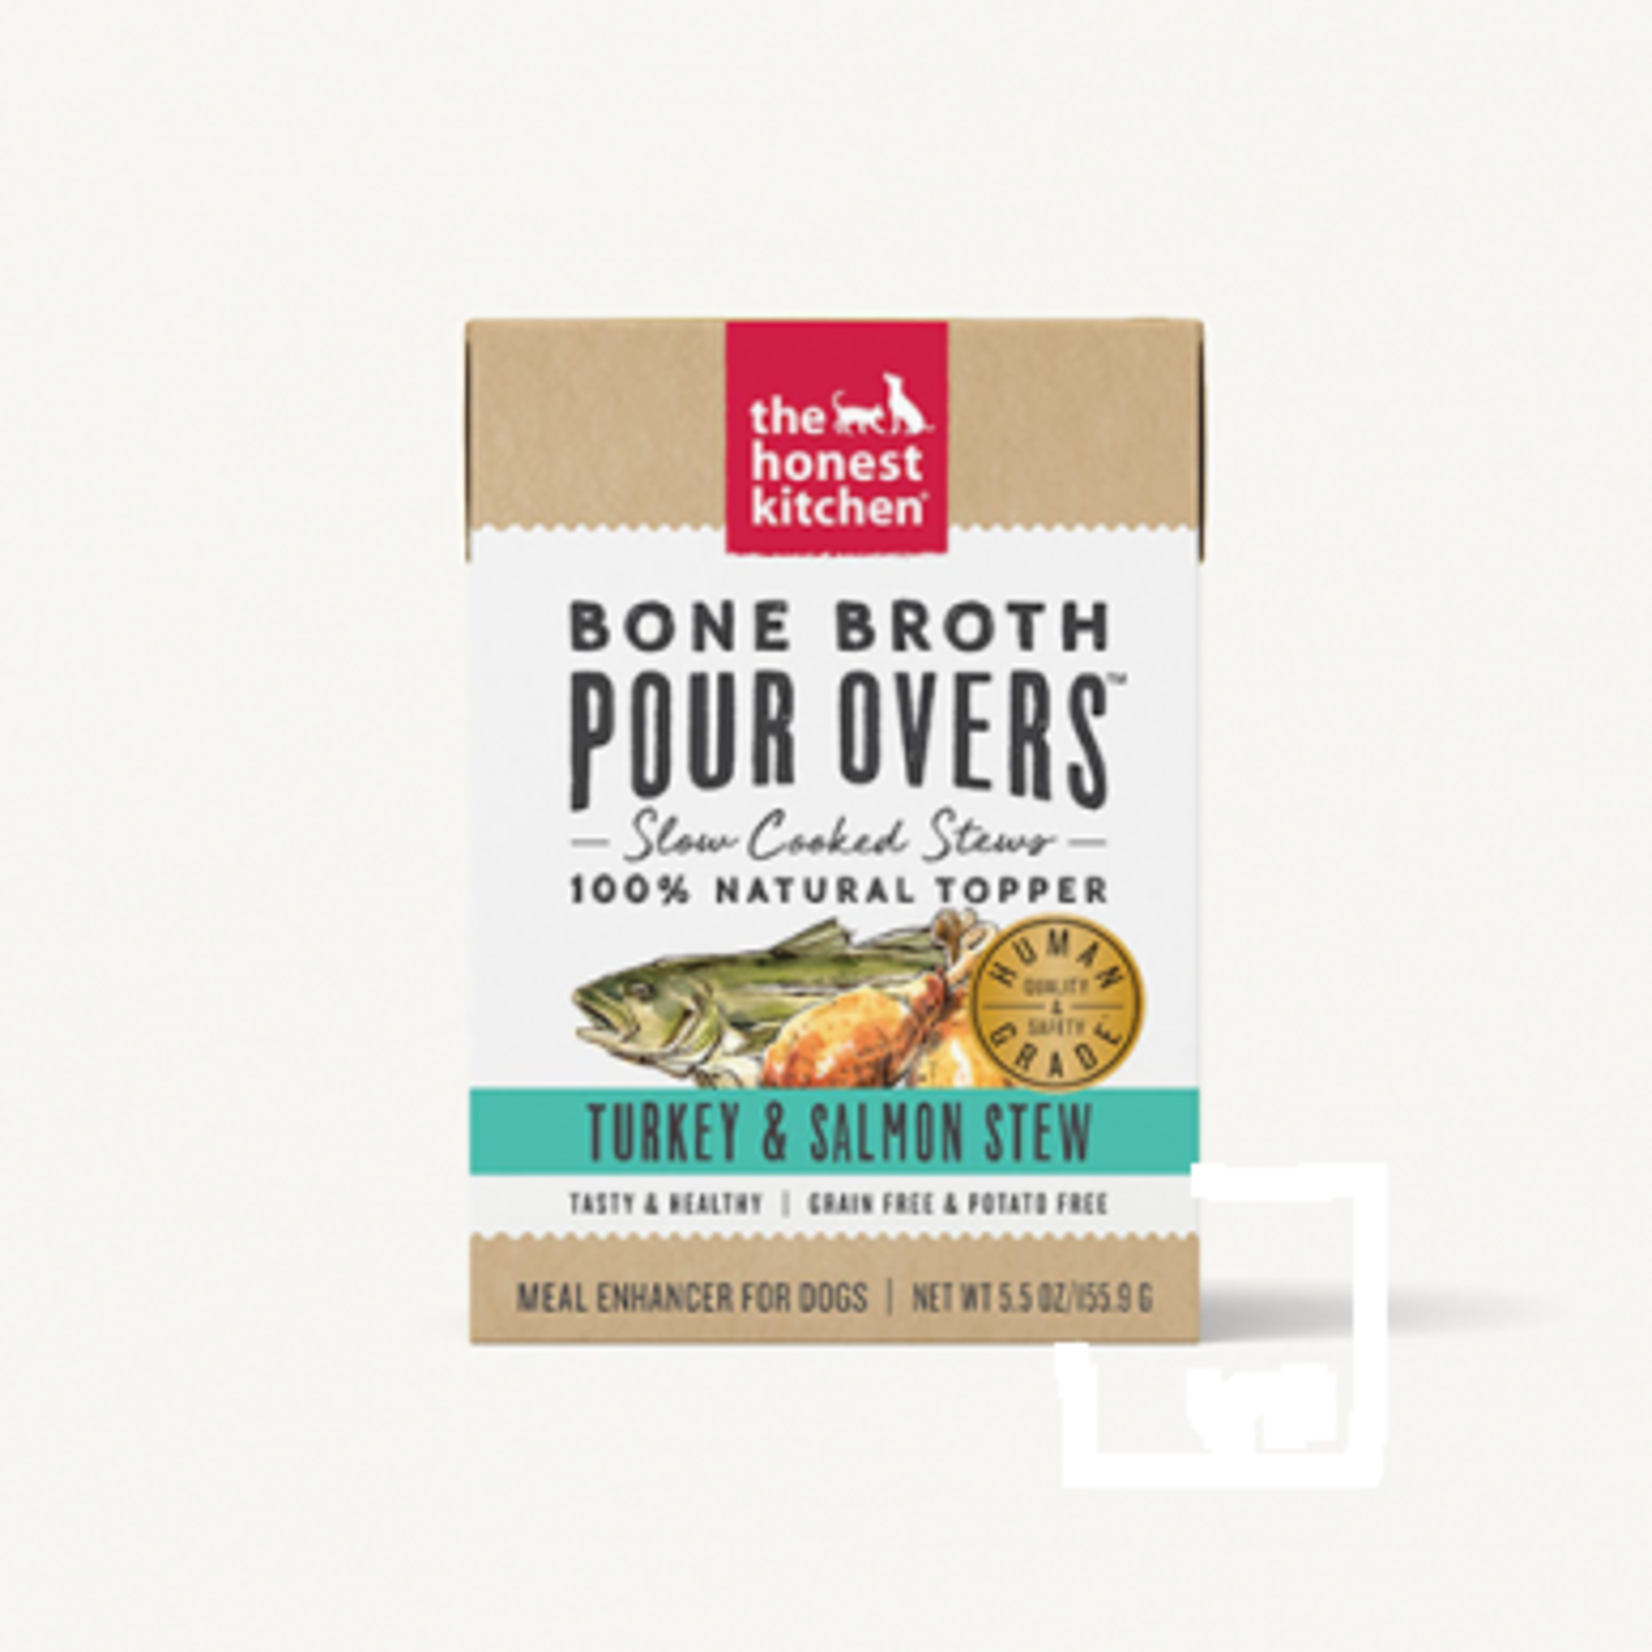 Honest Kitchen Turkey & Salmon-Bone Broth Pour Over - 5.5 oz